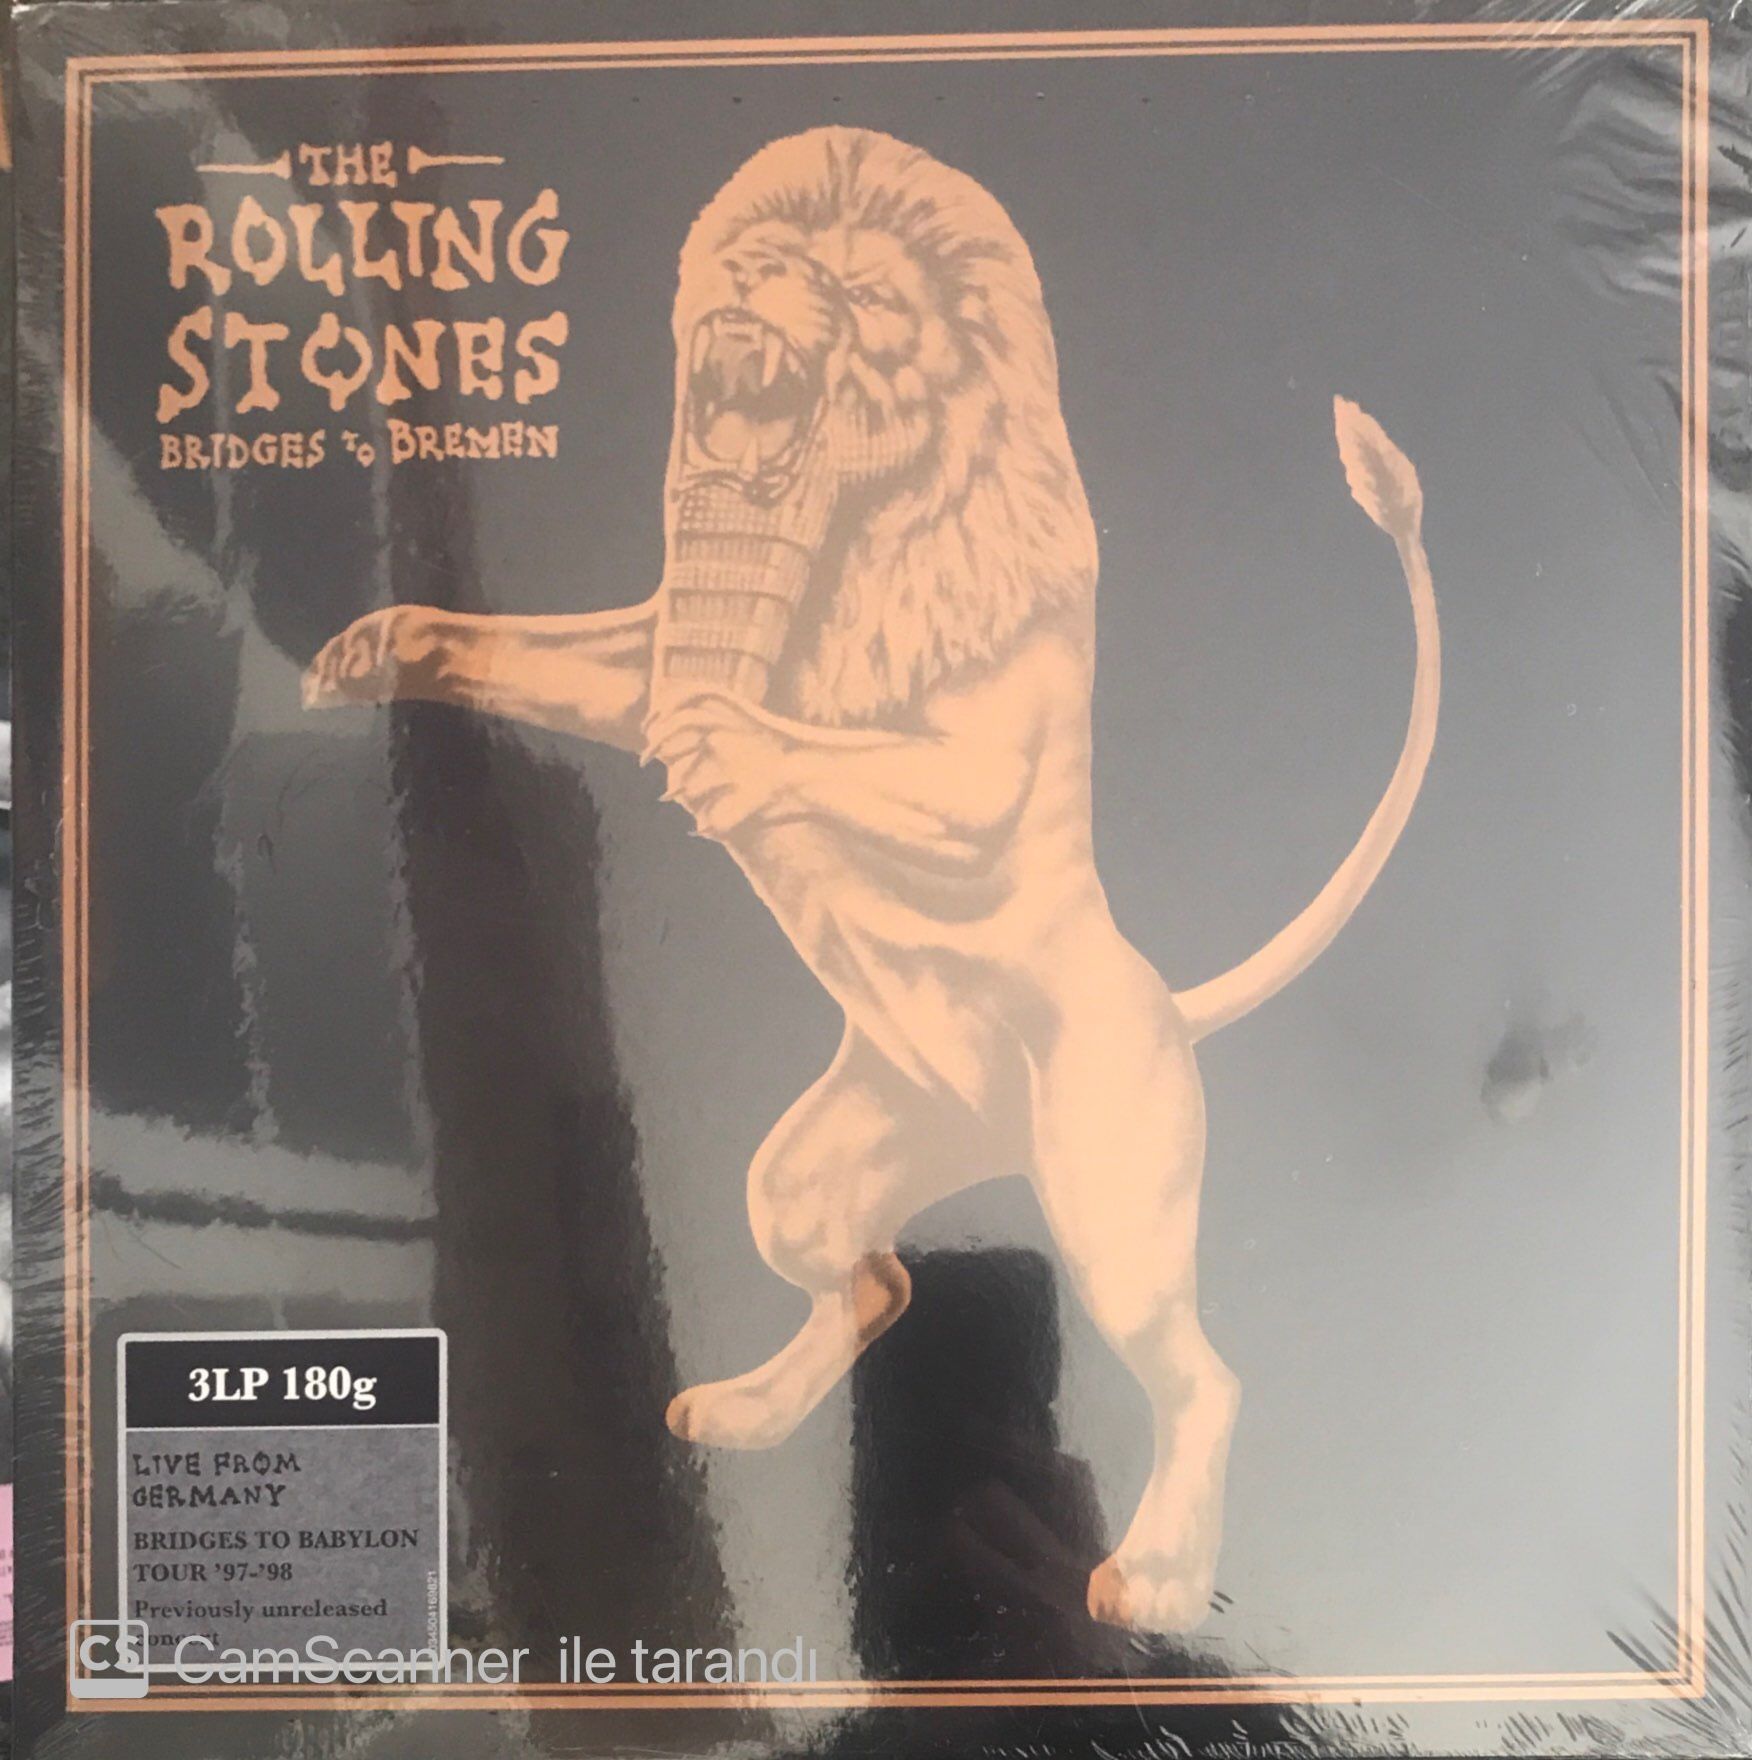 The Rolling Stones Bridges To Bremen LP